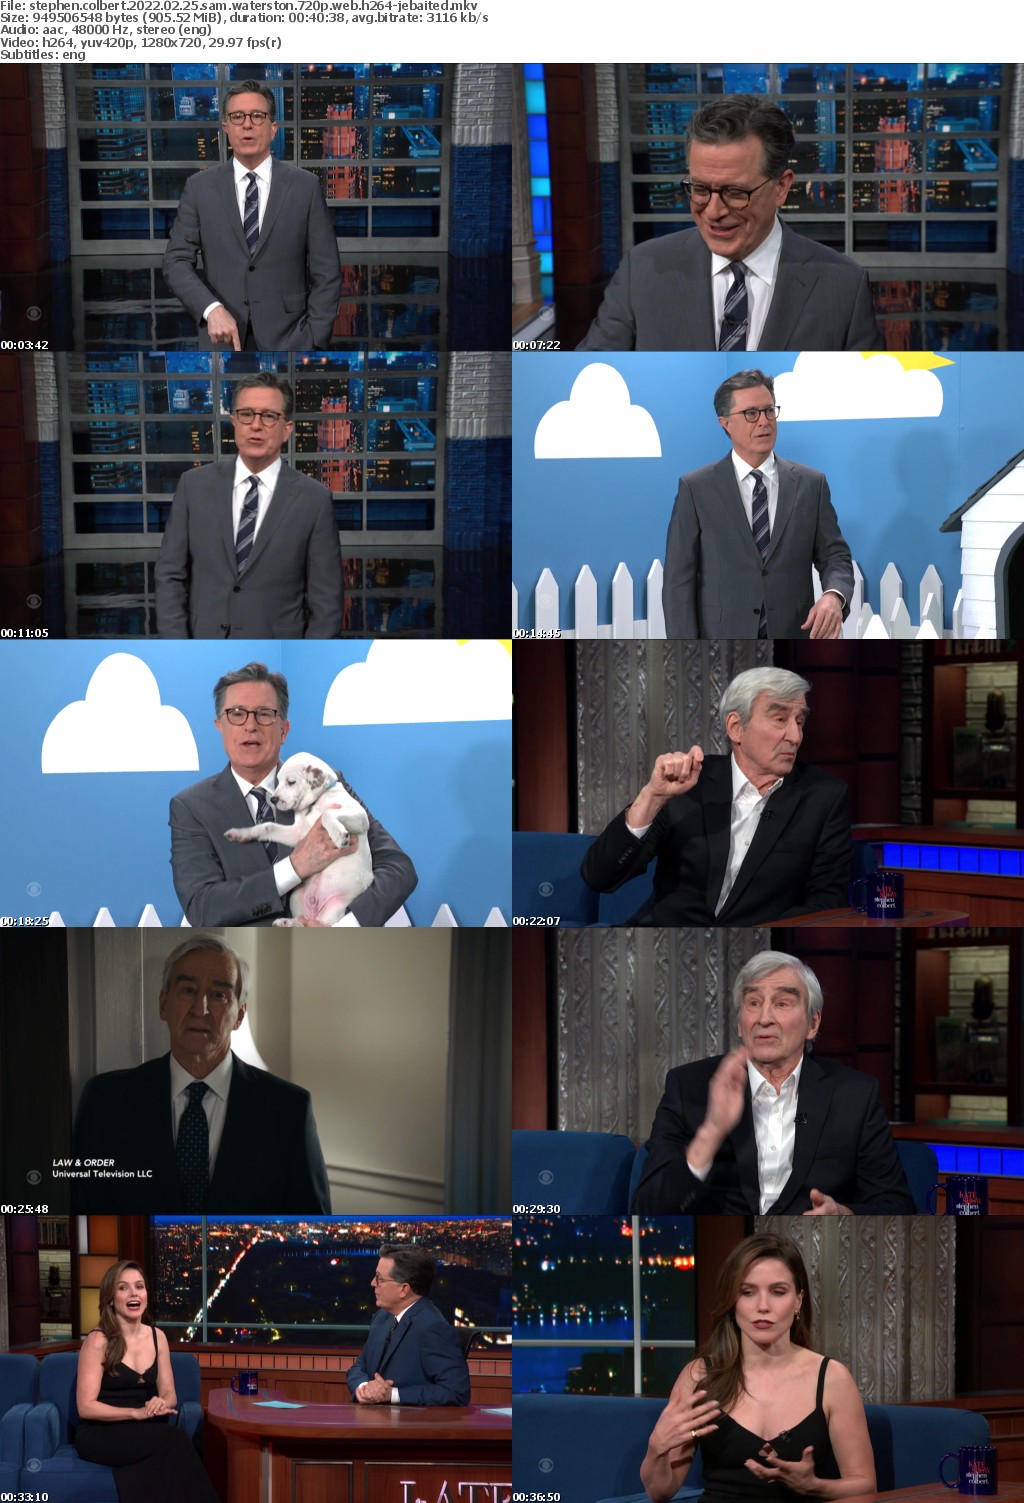 Stephen Colbert 2022 02 25 Sam Waterston 720p WEB H264-JEBAITED